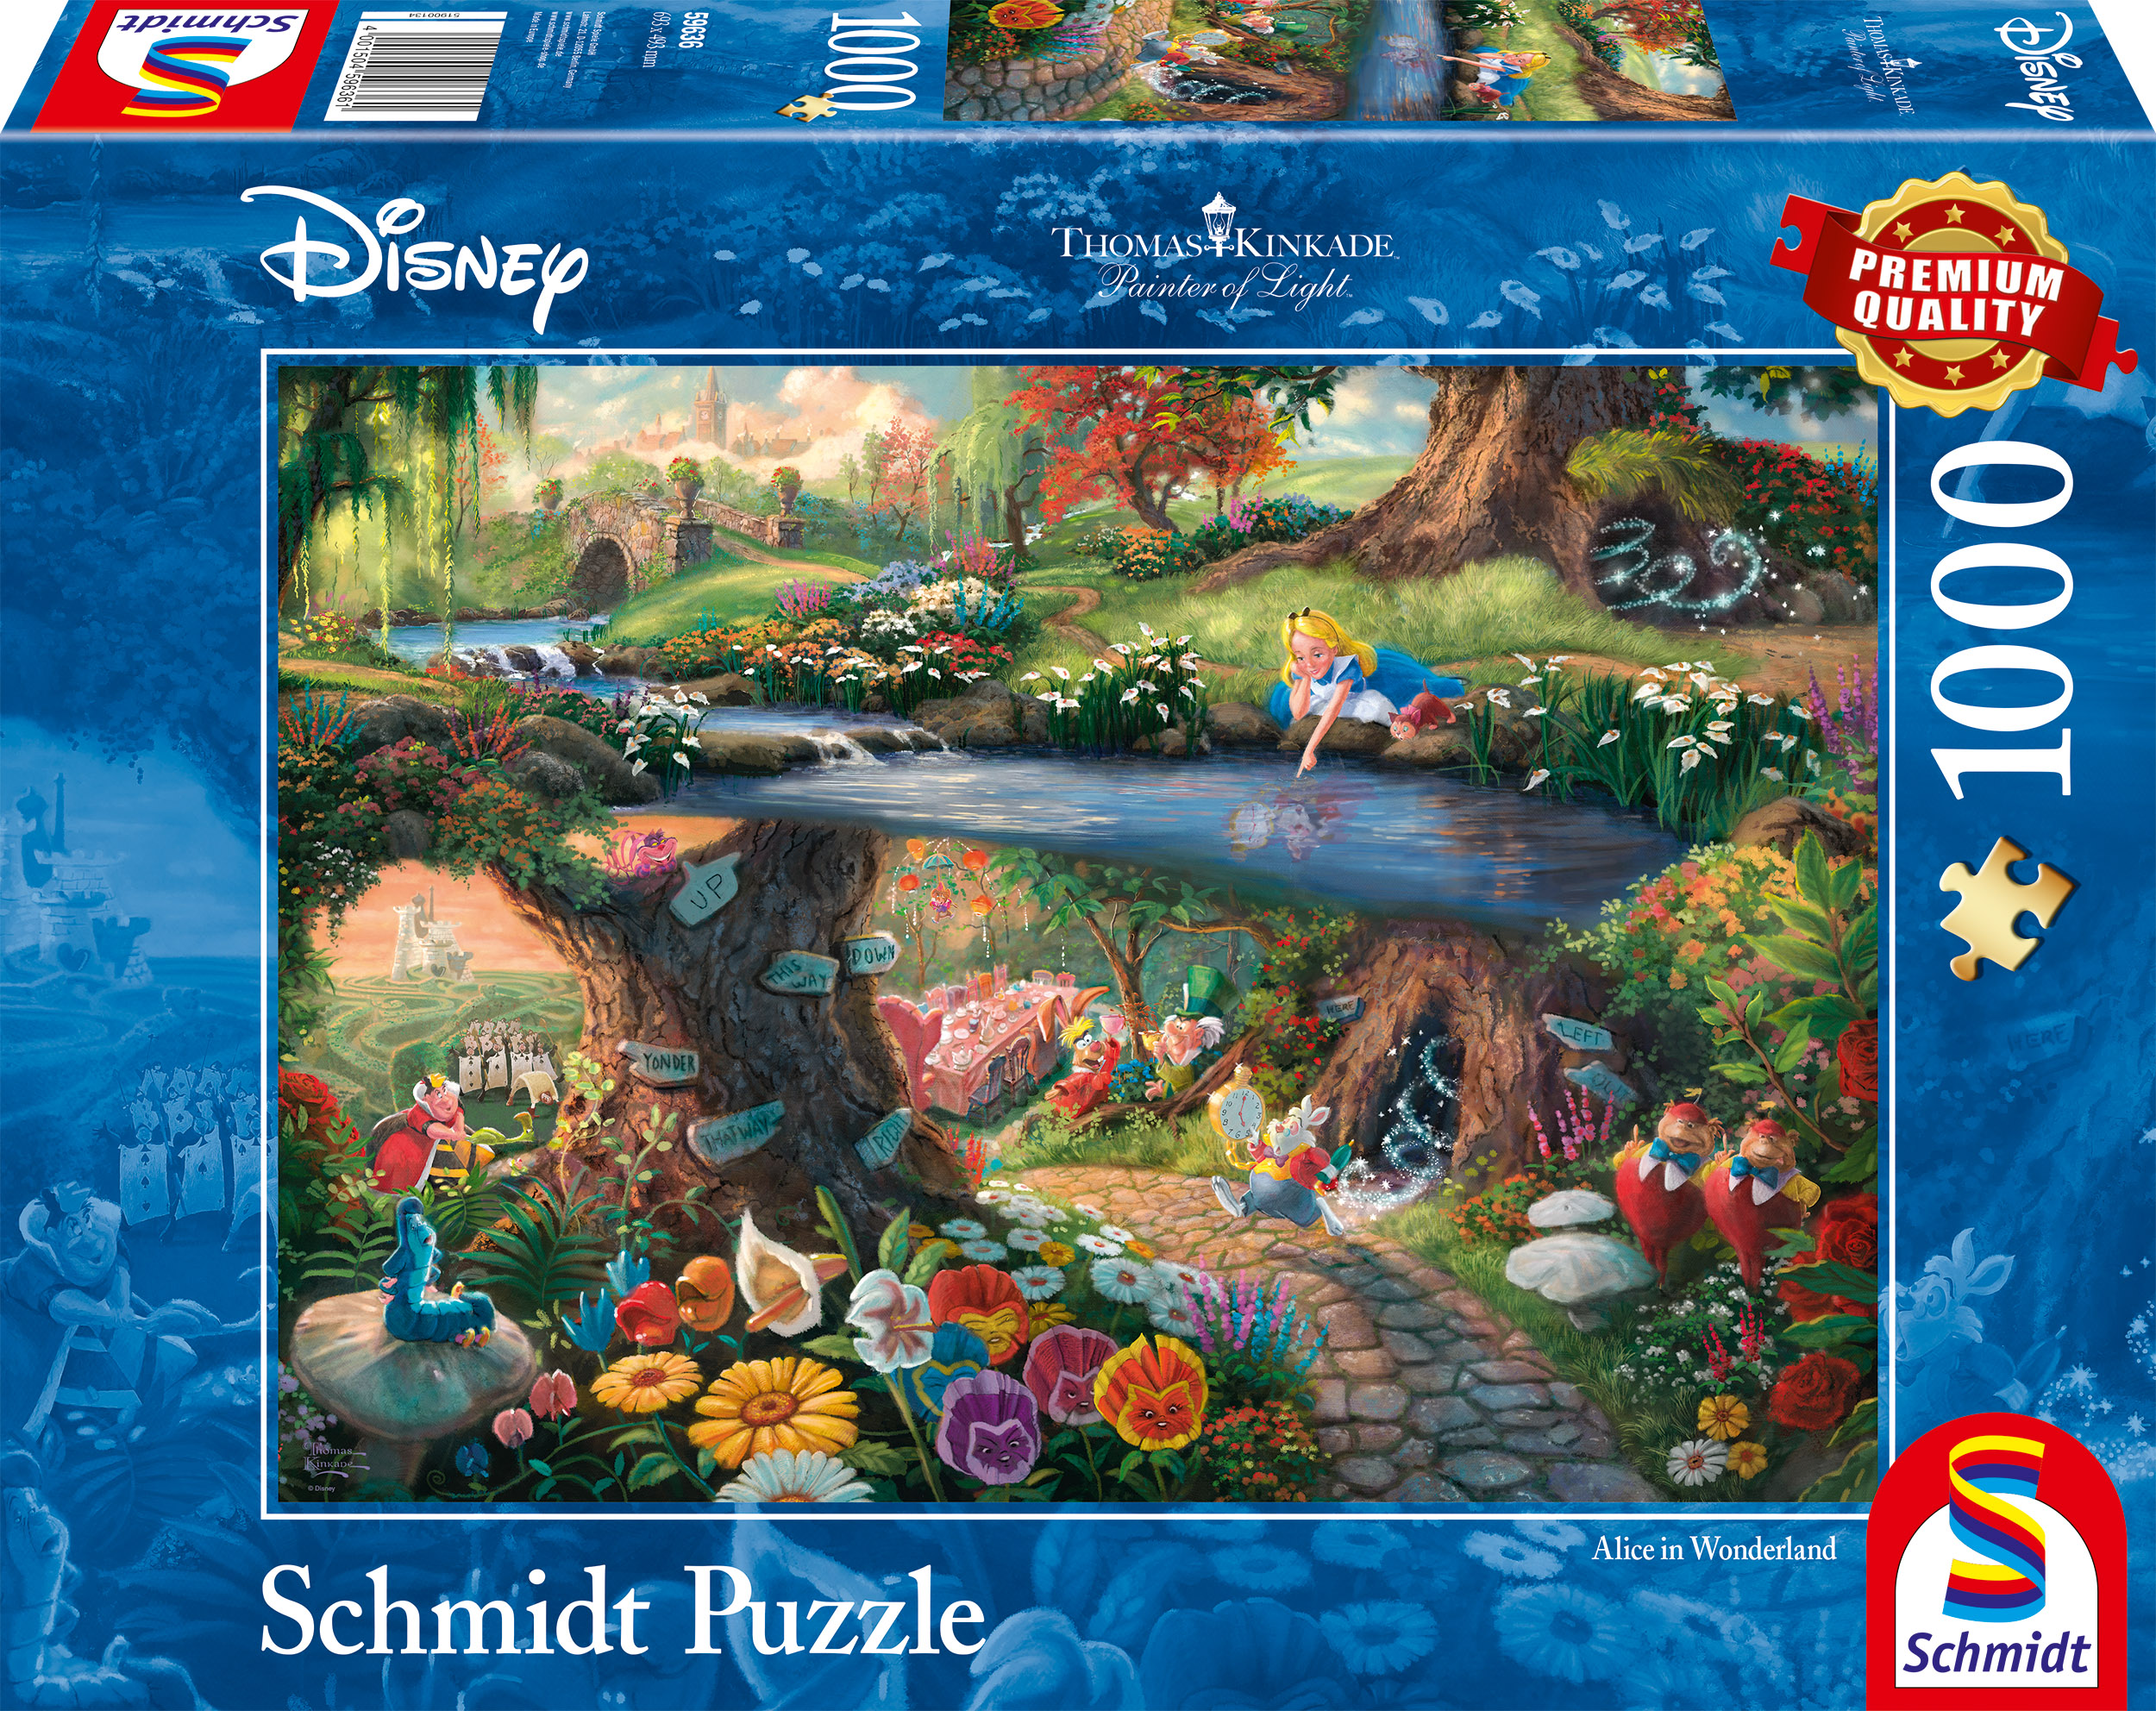 Puzzle Disney (UE) SPIELE im Wunderland Alice SCHMIDT